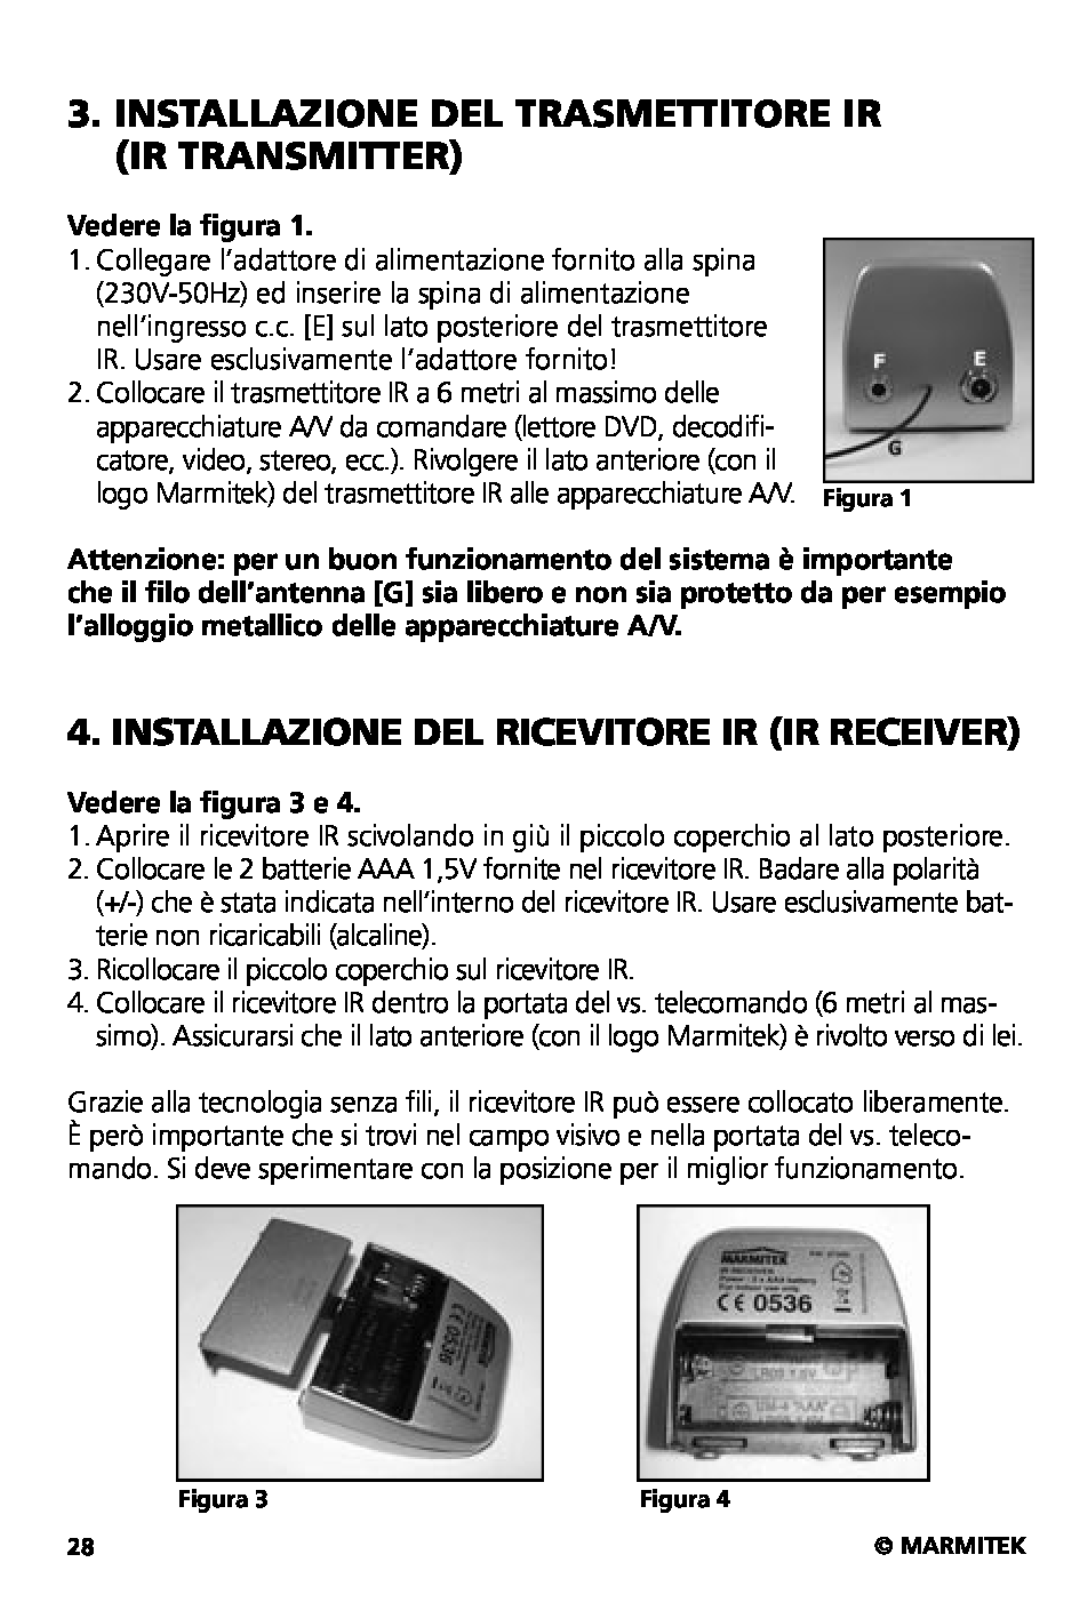 Marmitek XS user manual Installazione Del Trasmettitore Ir Ir Transmitter, Installazione Del Ricevitore Ir Ir Receiver 